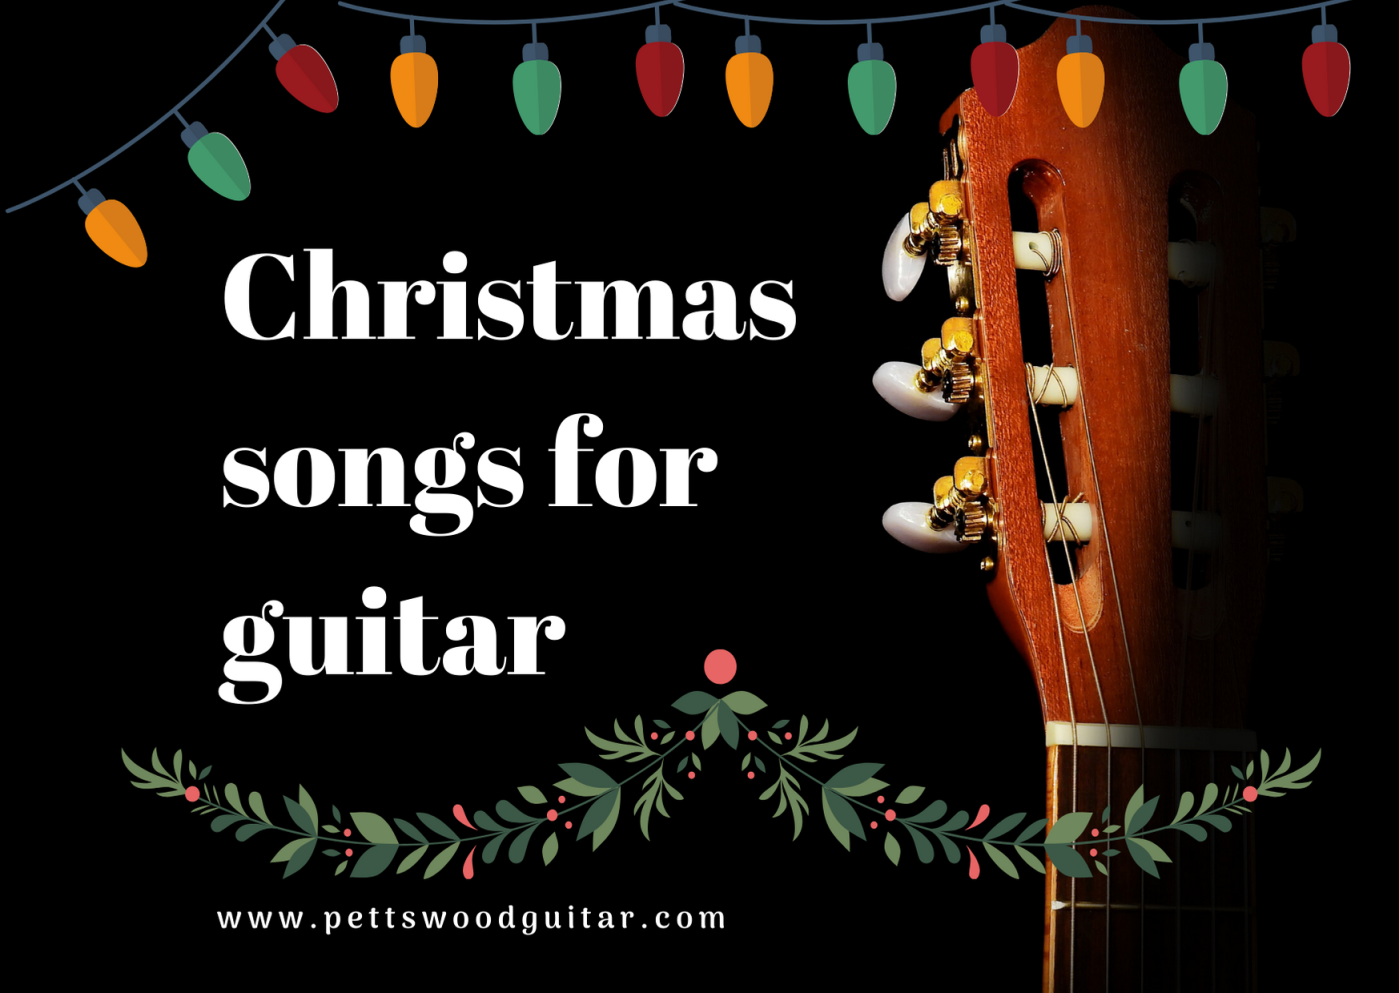 Christmas songs for guitar